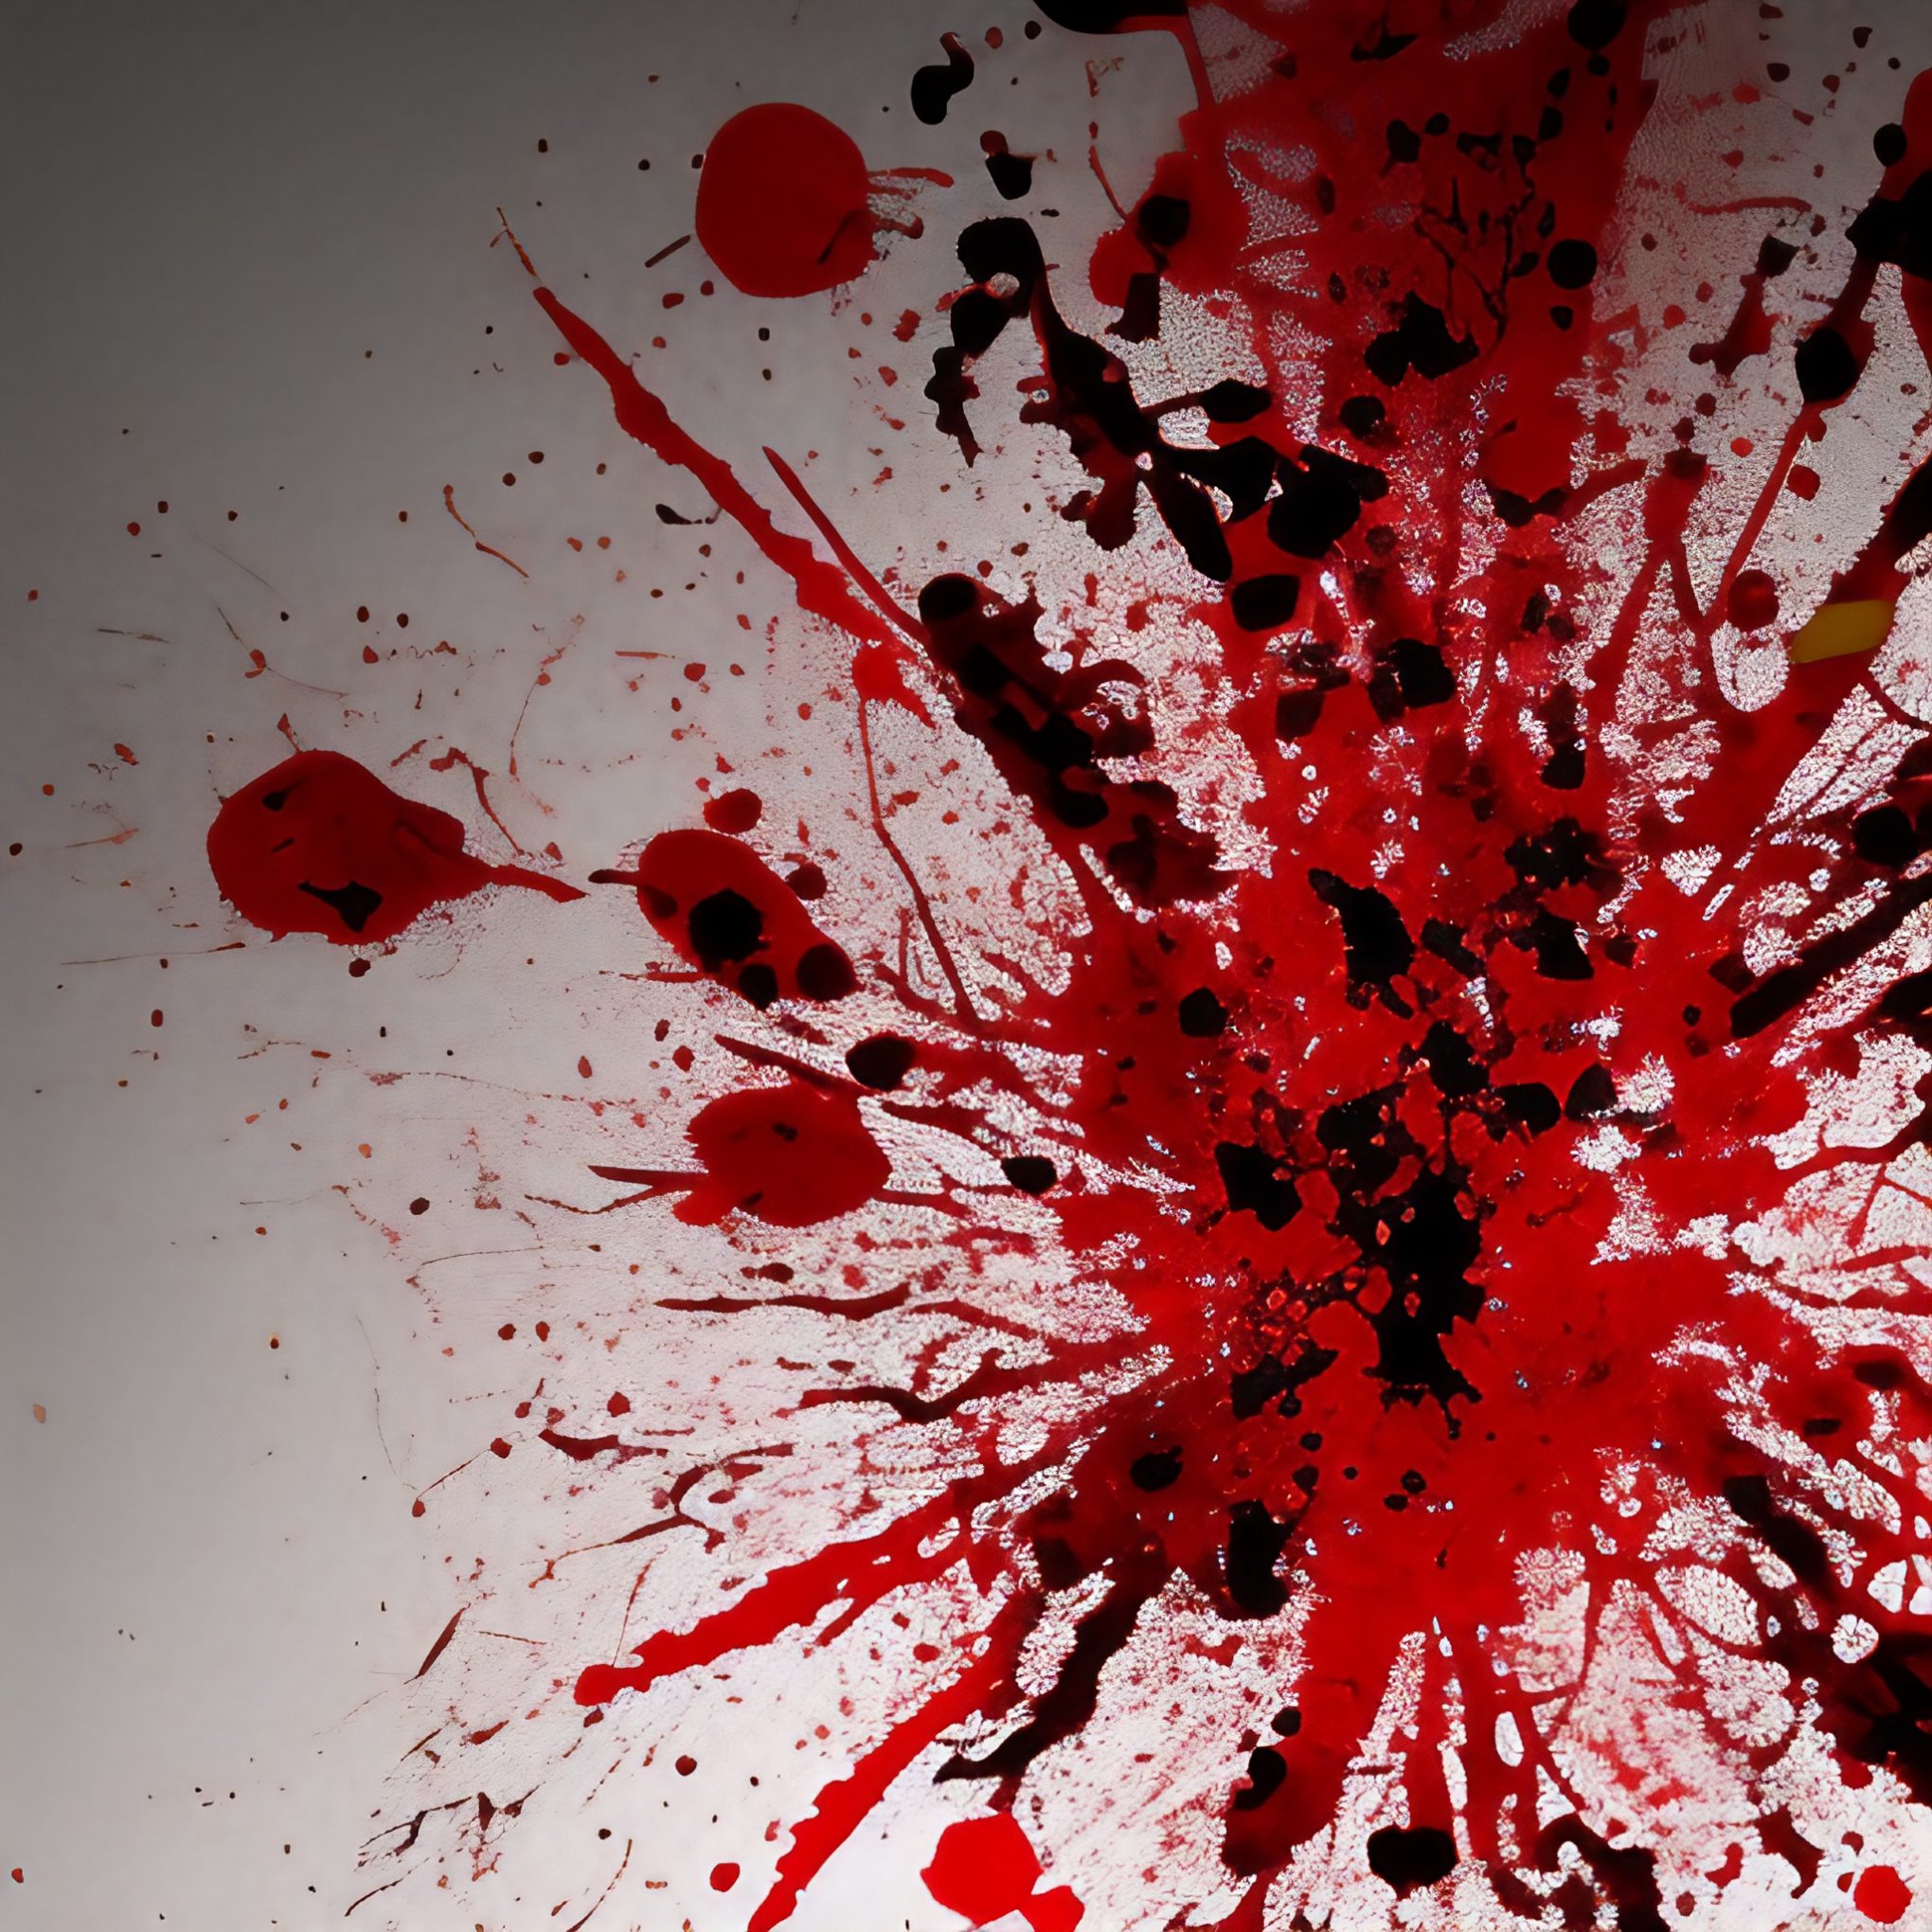 Abstract Blood Splatter Horror Free Stock Image